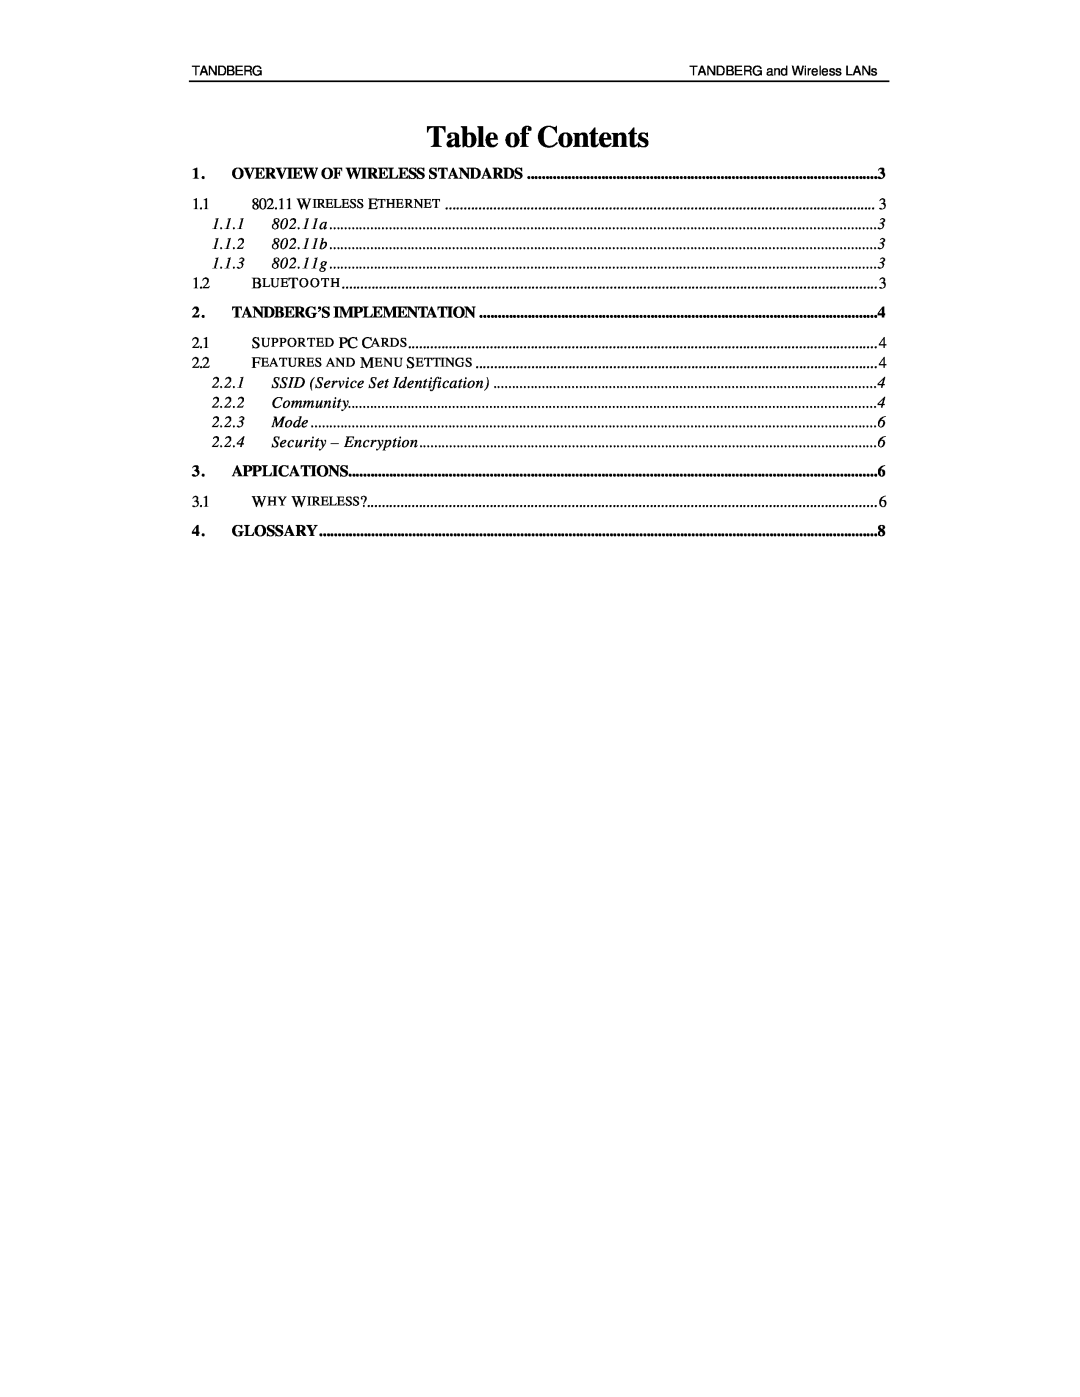 TANDBERG D12809 manual Table of Contents, 1.1.1, 1.1.2, 1.1.3, 2.2.2, 2.2.3, 2.2.4 